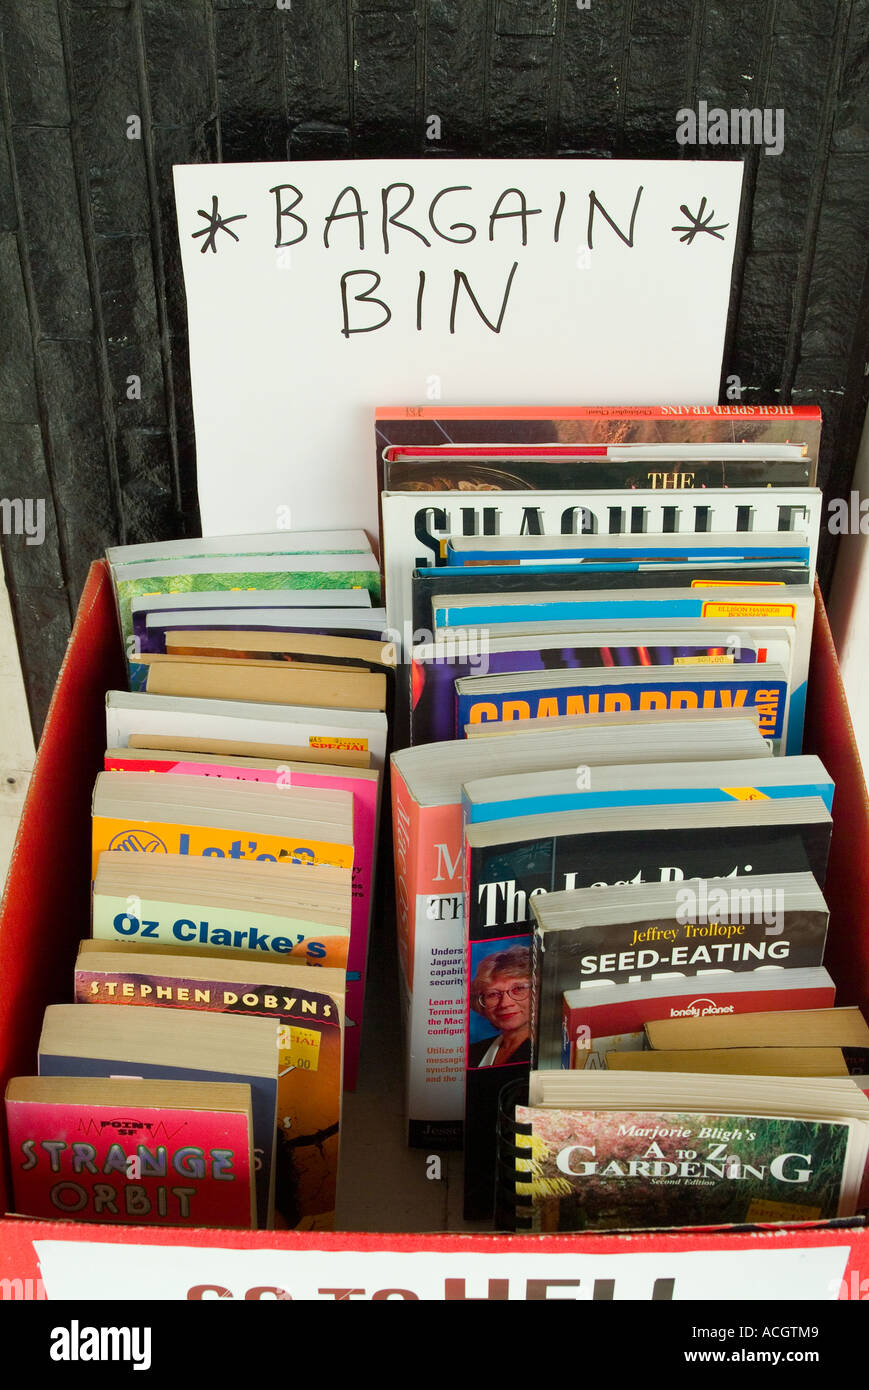 A bin of bargain books outside a bookshop Stock Photo